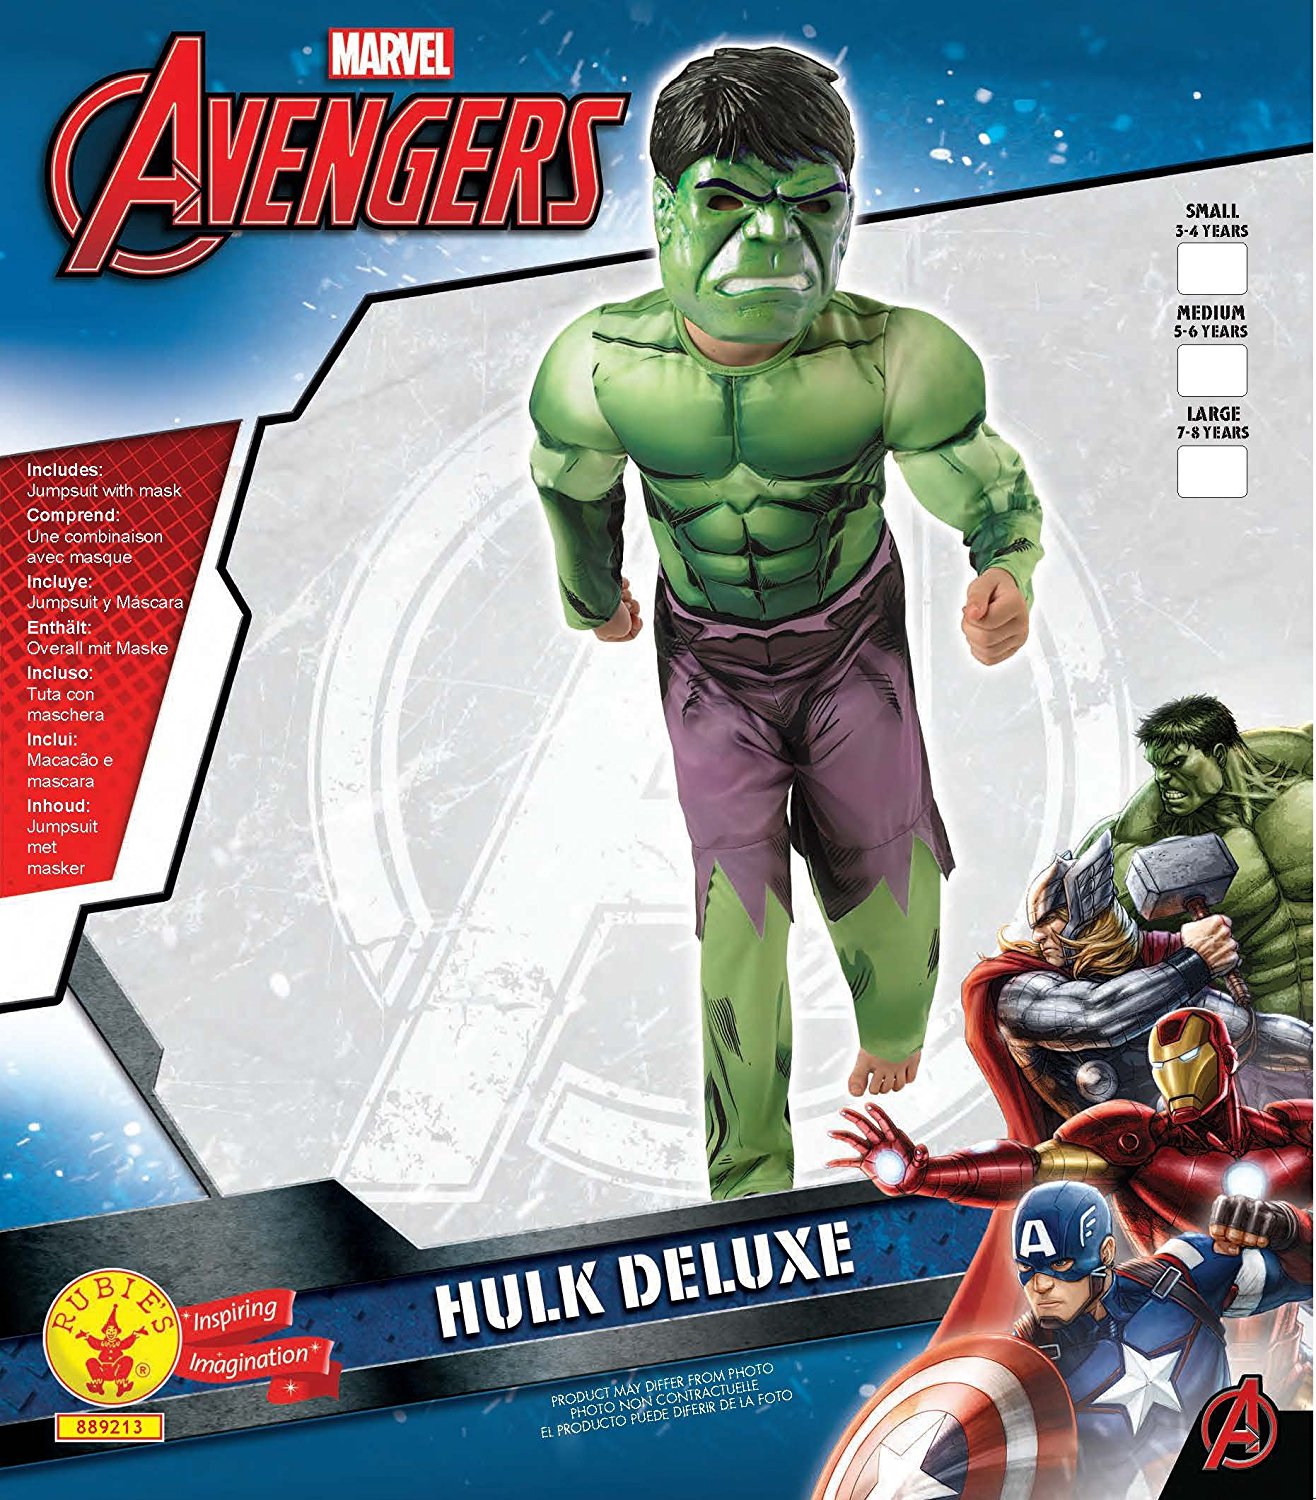 Hulk Marvel Avengers - Vestito carnevale per neonato - NB (0-6 mesi)